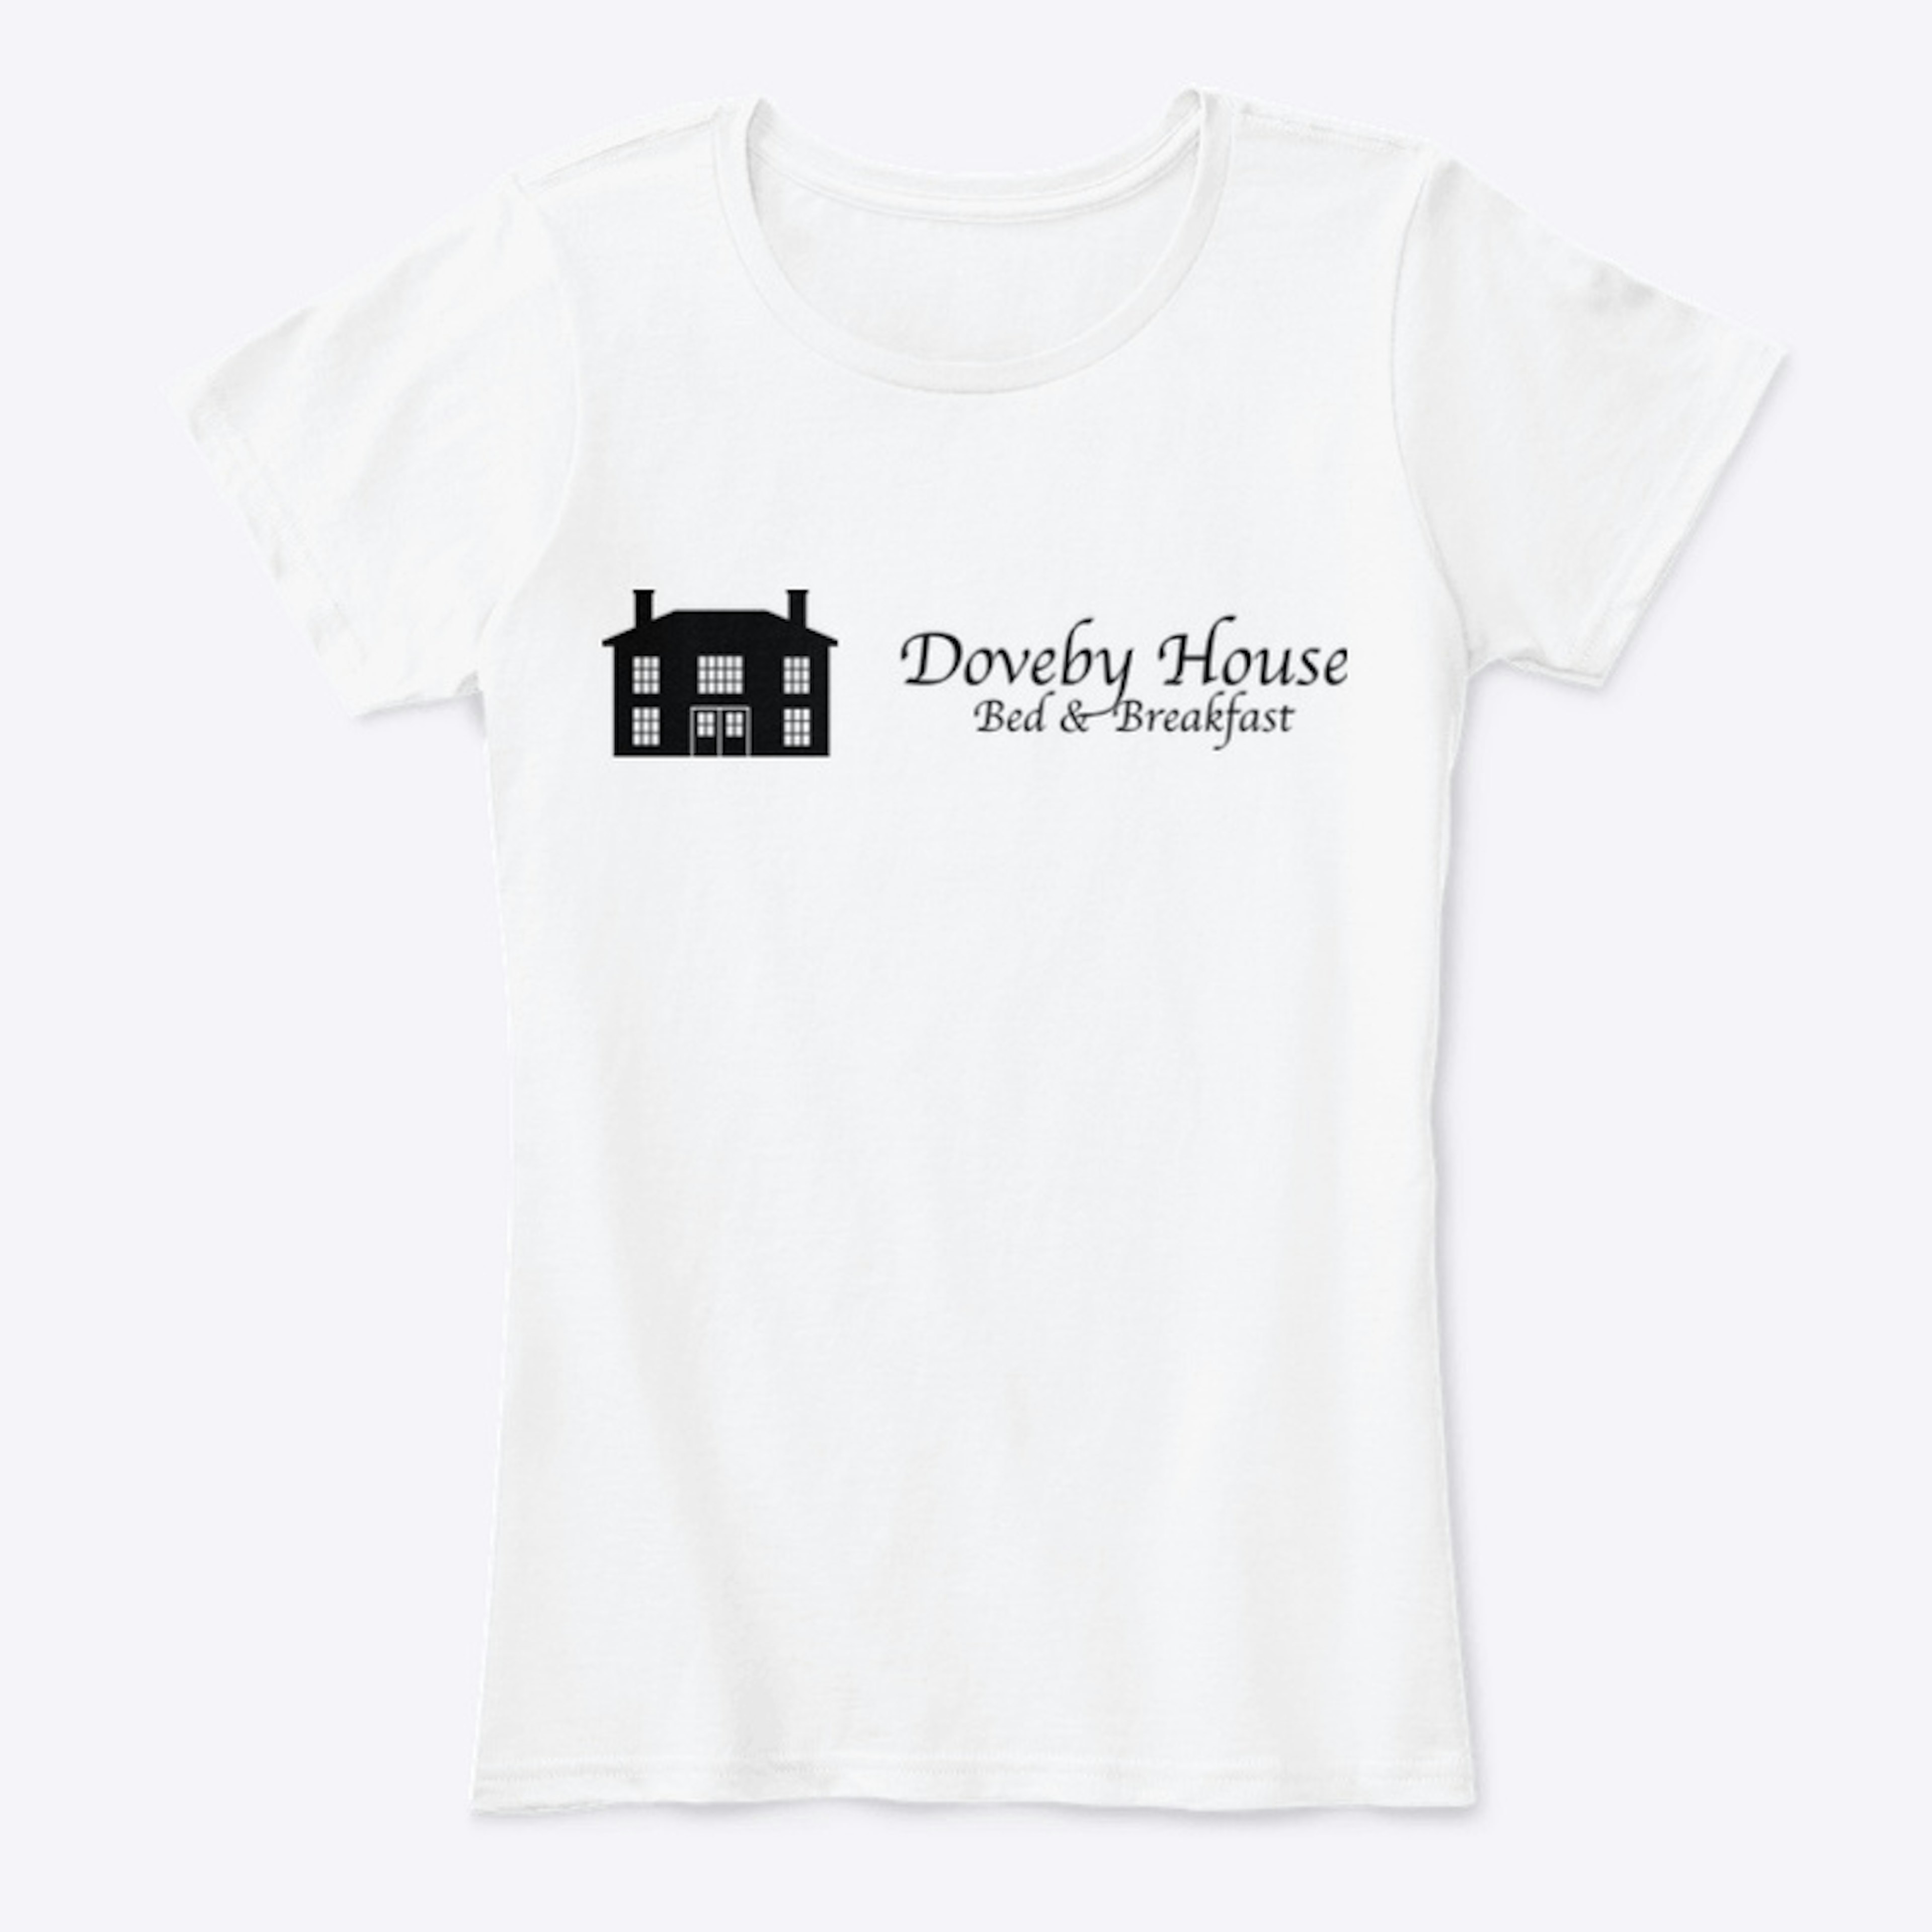 Doveby House - new design - black.